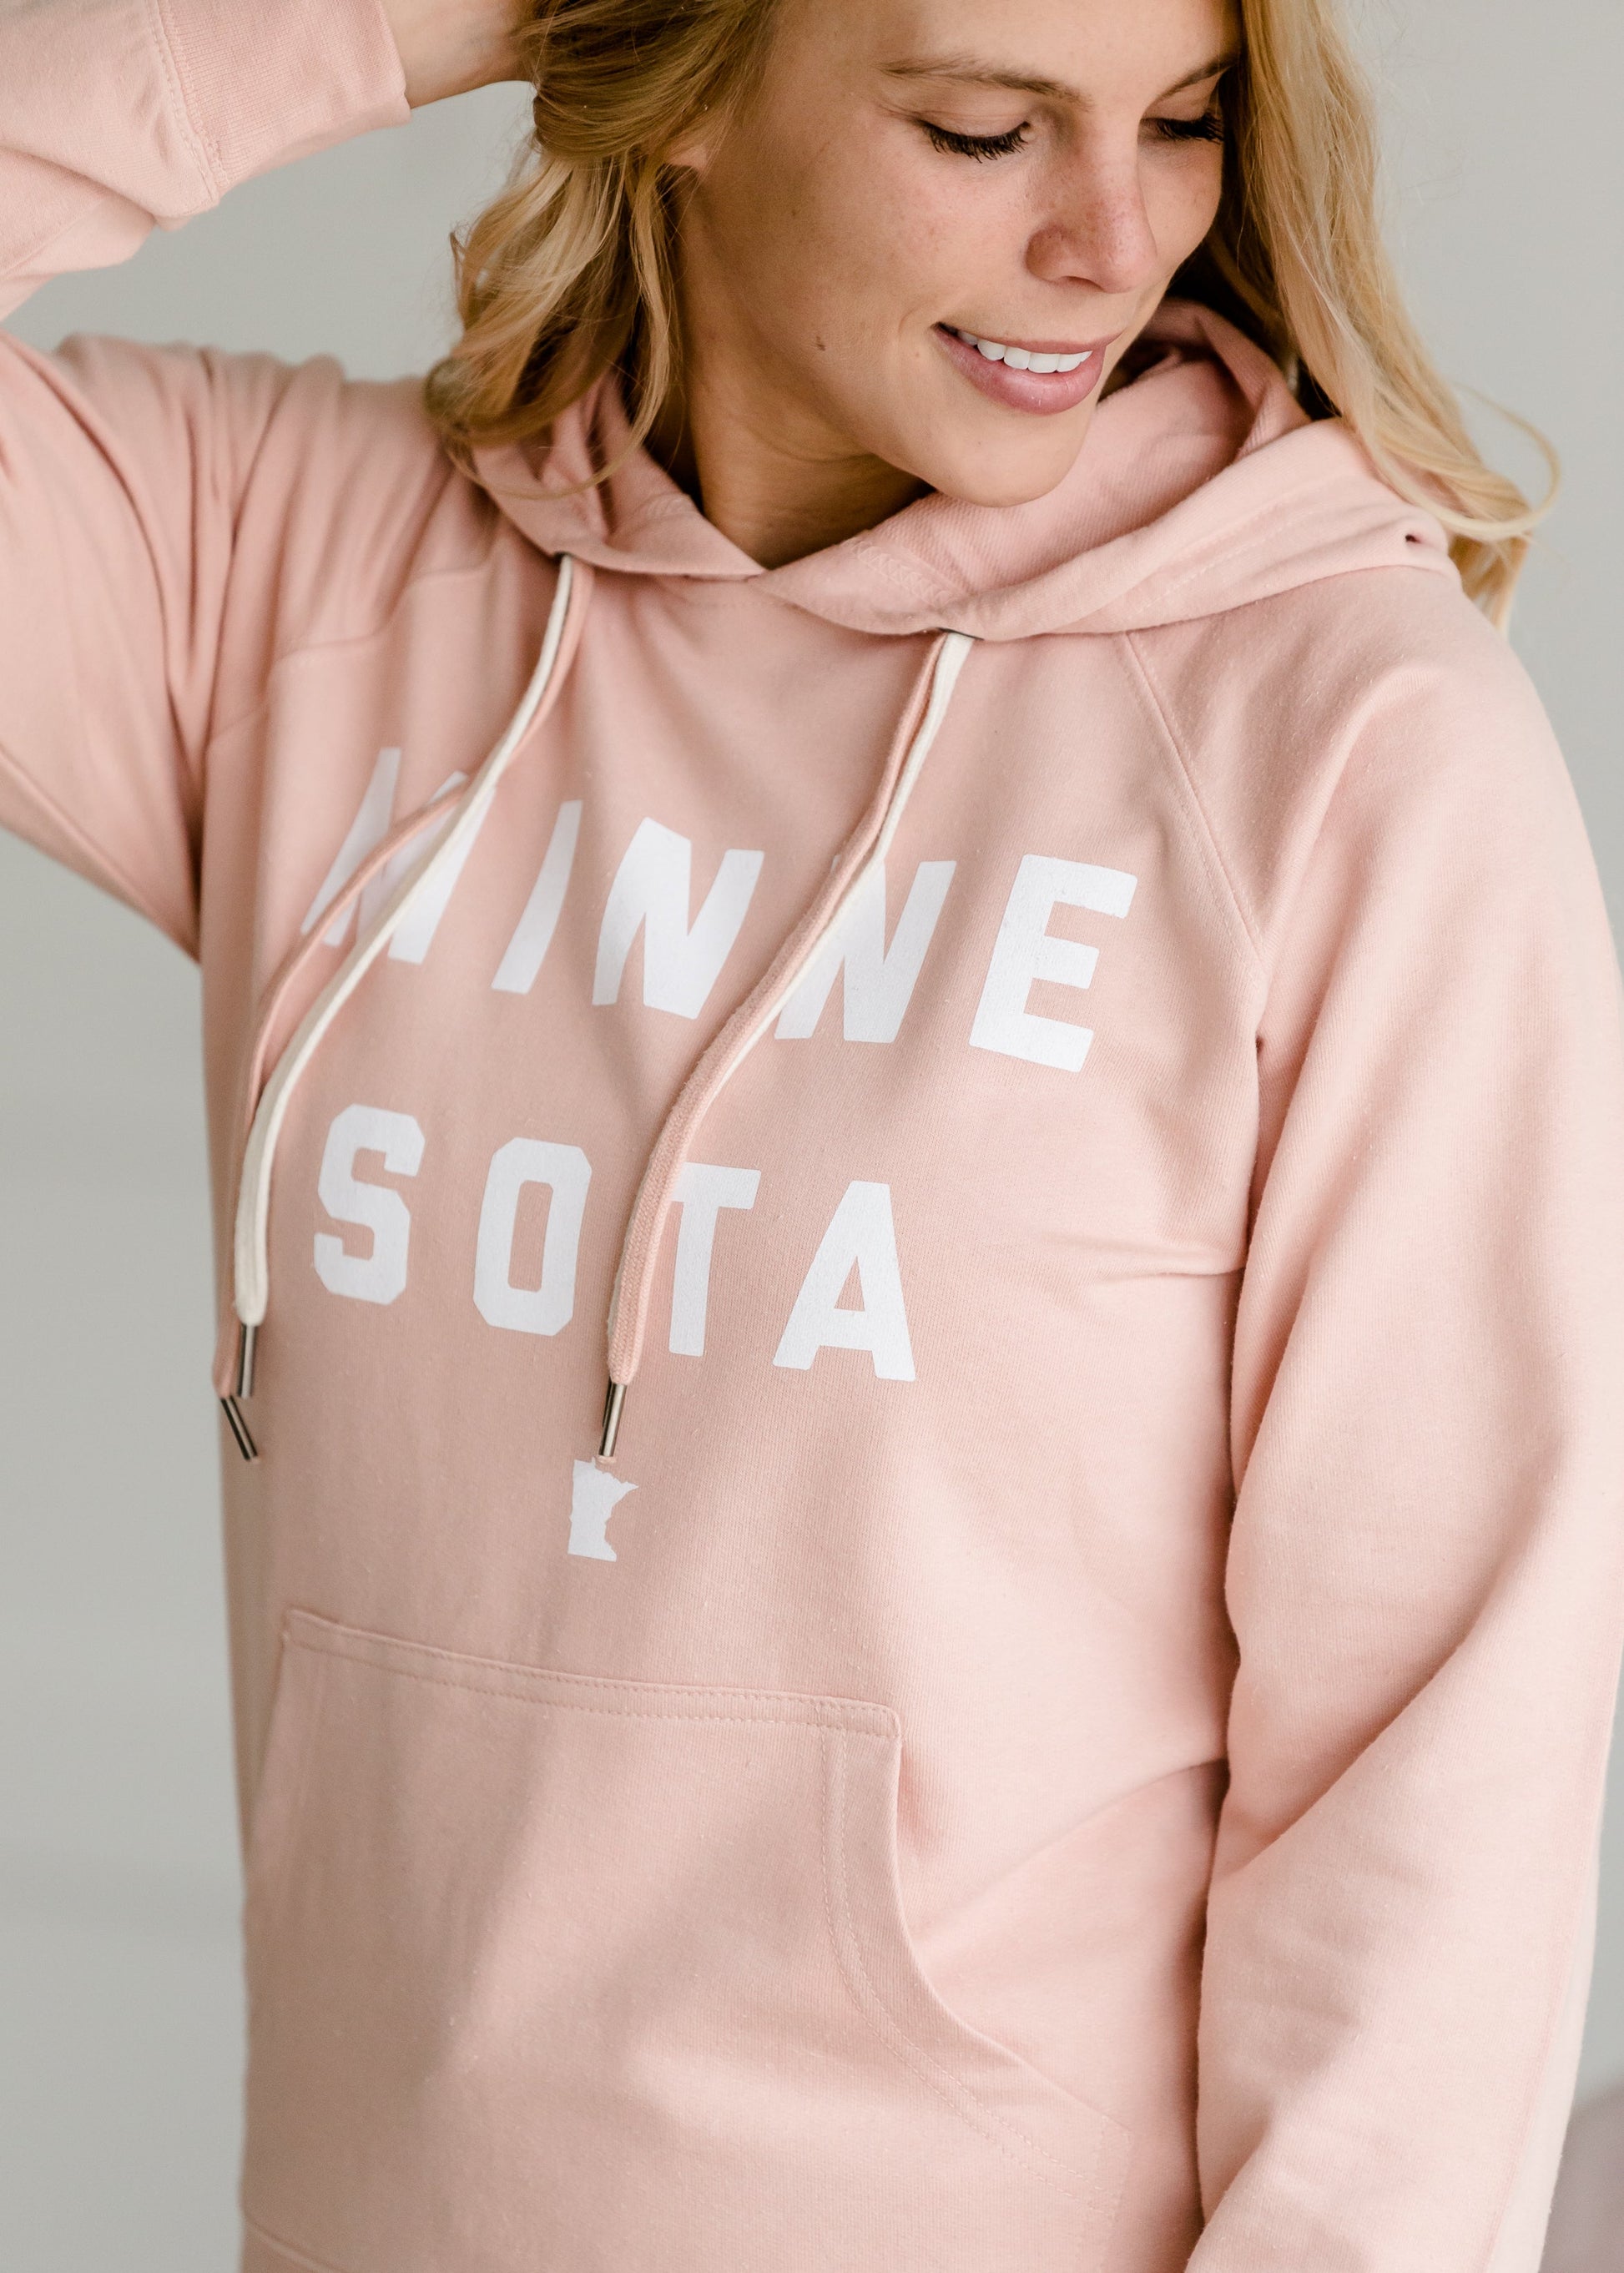 Sota' Swift River Blush Sweatshirt - FINAL SALE Tops